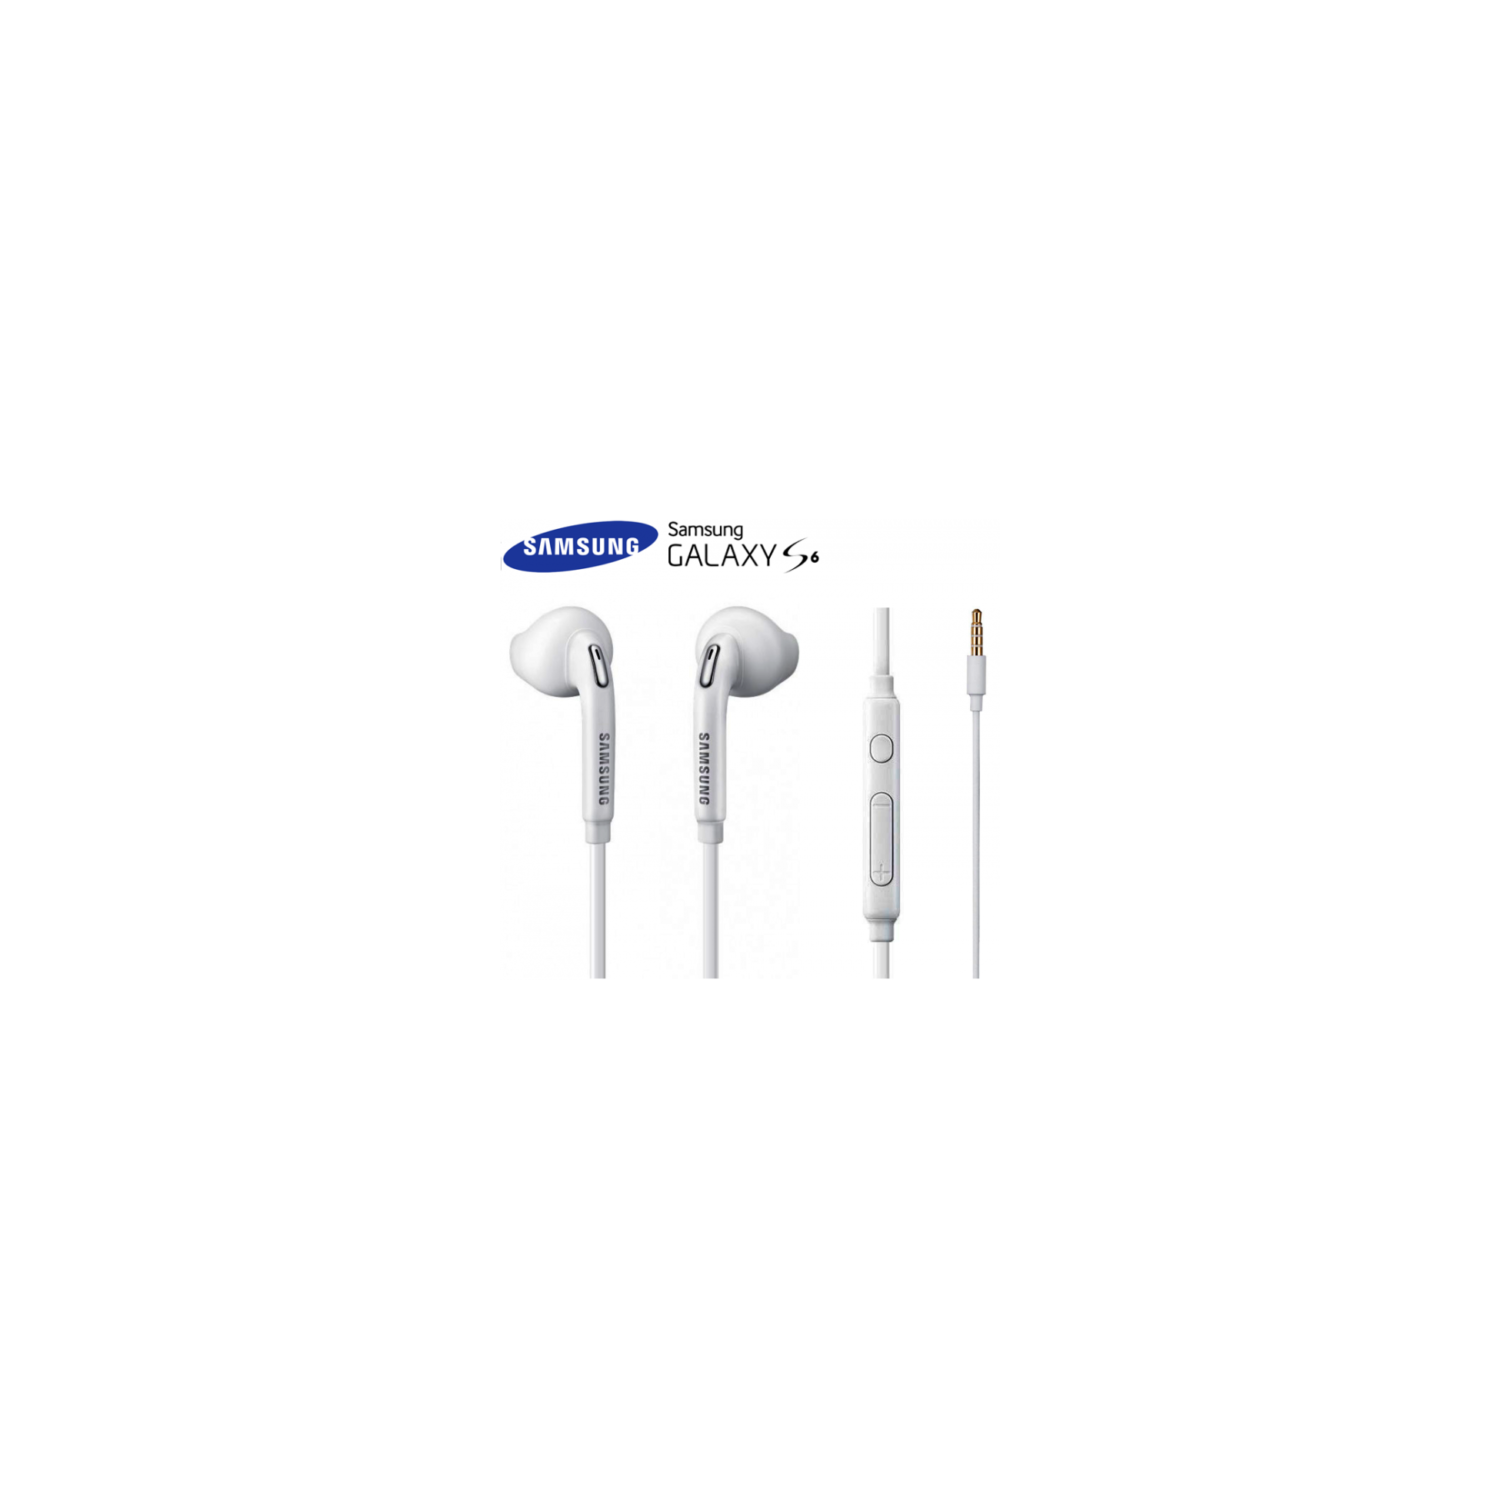 3 X SAMSUNG GALAXY HEADSET HEADPHONE HEADSFREE EARPHONE FOR SAMSUNG GALAXY S6 S7 S6 EDGE S9 S10 NOTE 6 3.5MM WHITE - PACK 3